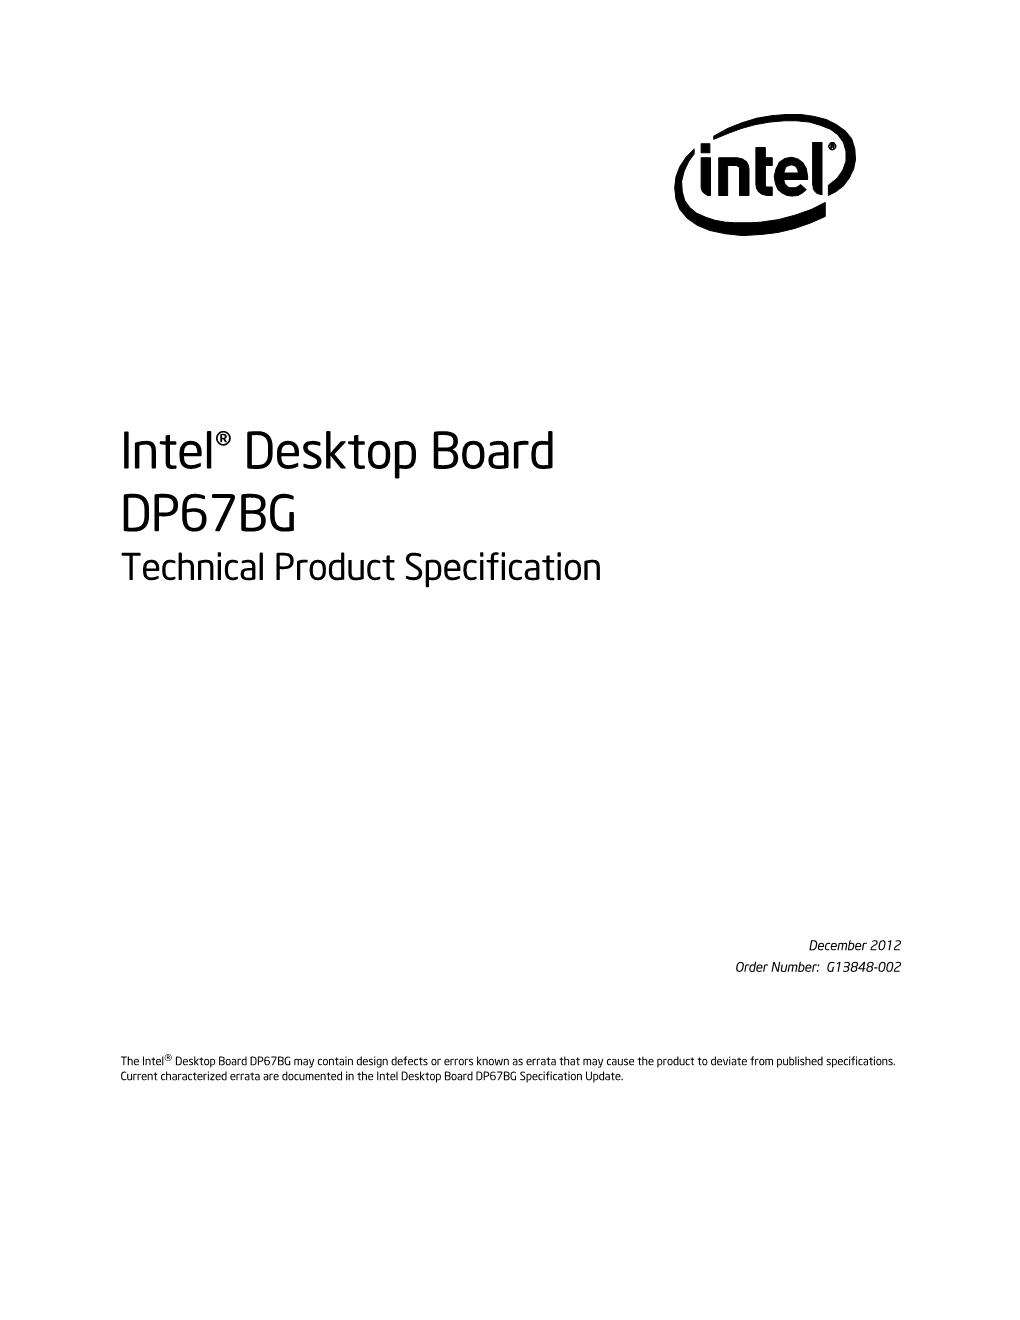 Intel® Desktop Board DP67BG Technical Product Specification